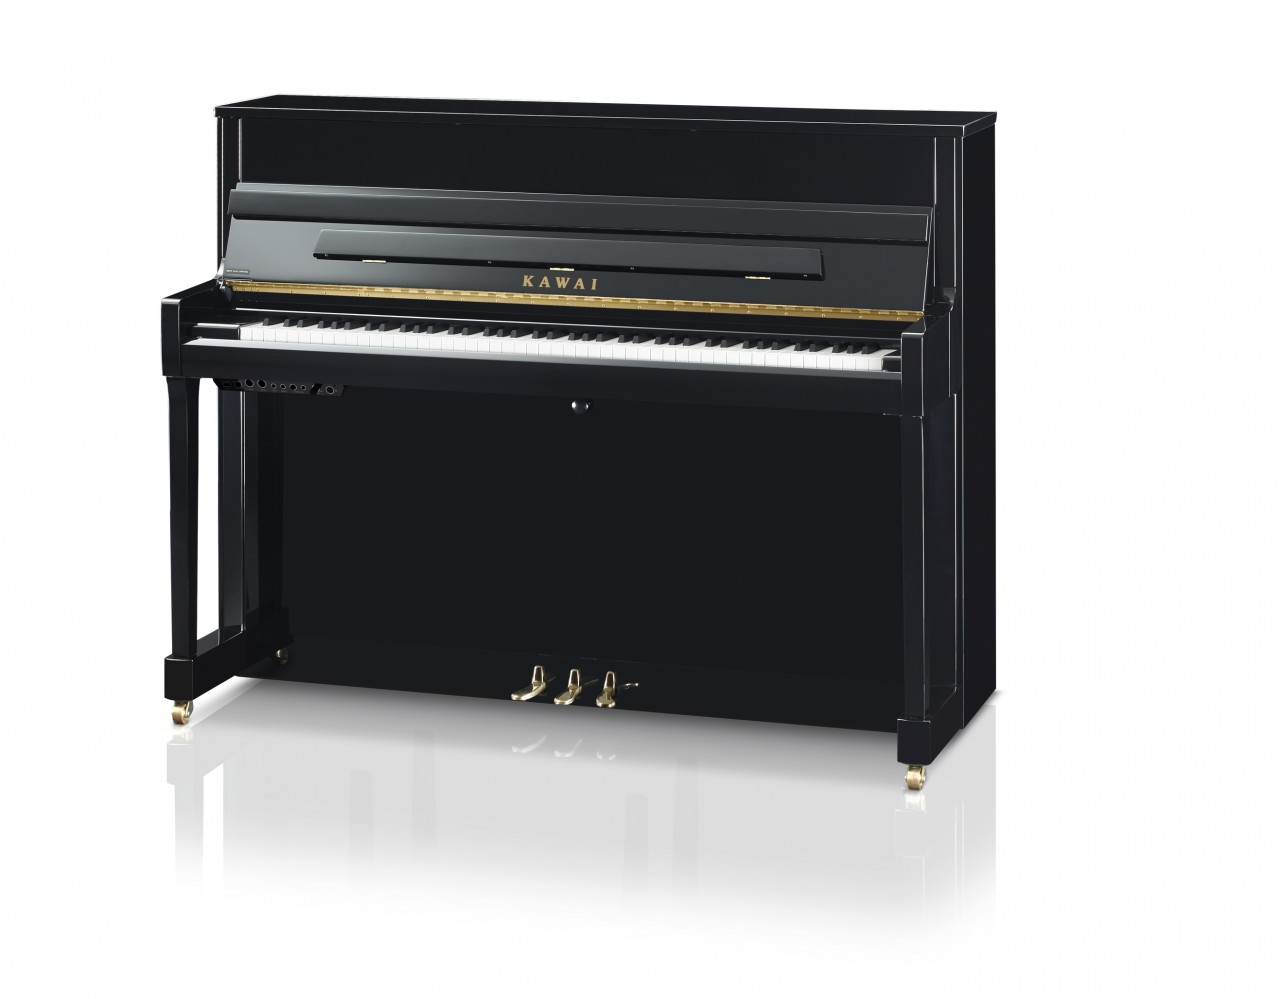 Kawai Klavier K 200 E/P ATX-4 Schwarz Hochglanz Bild 1